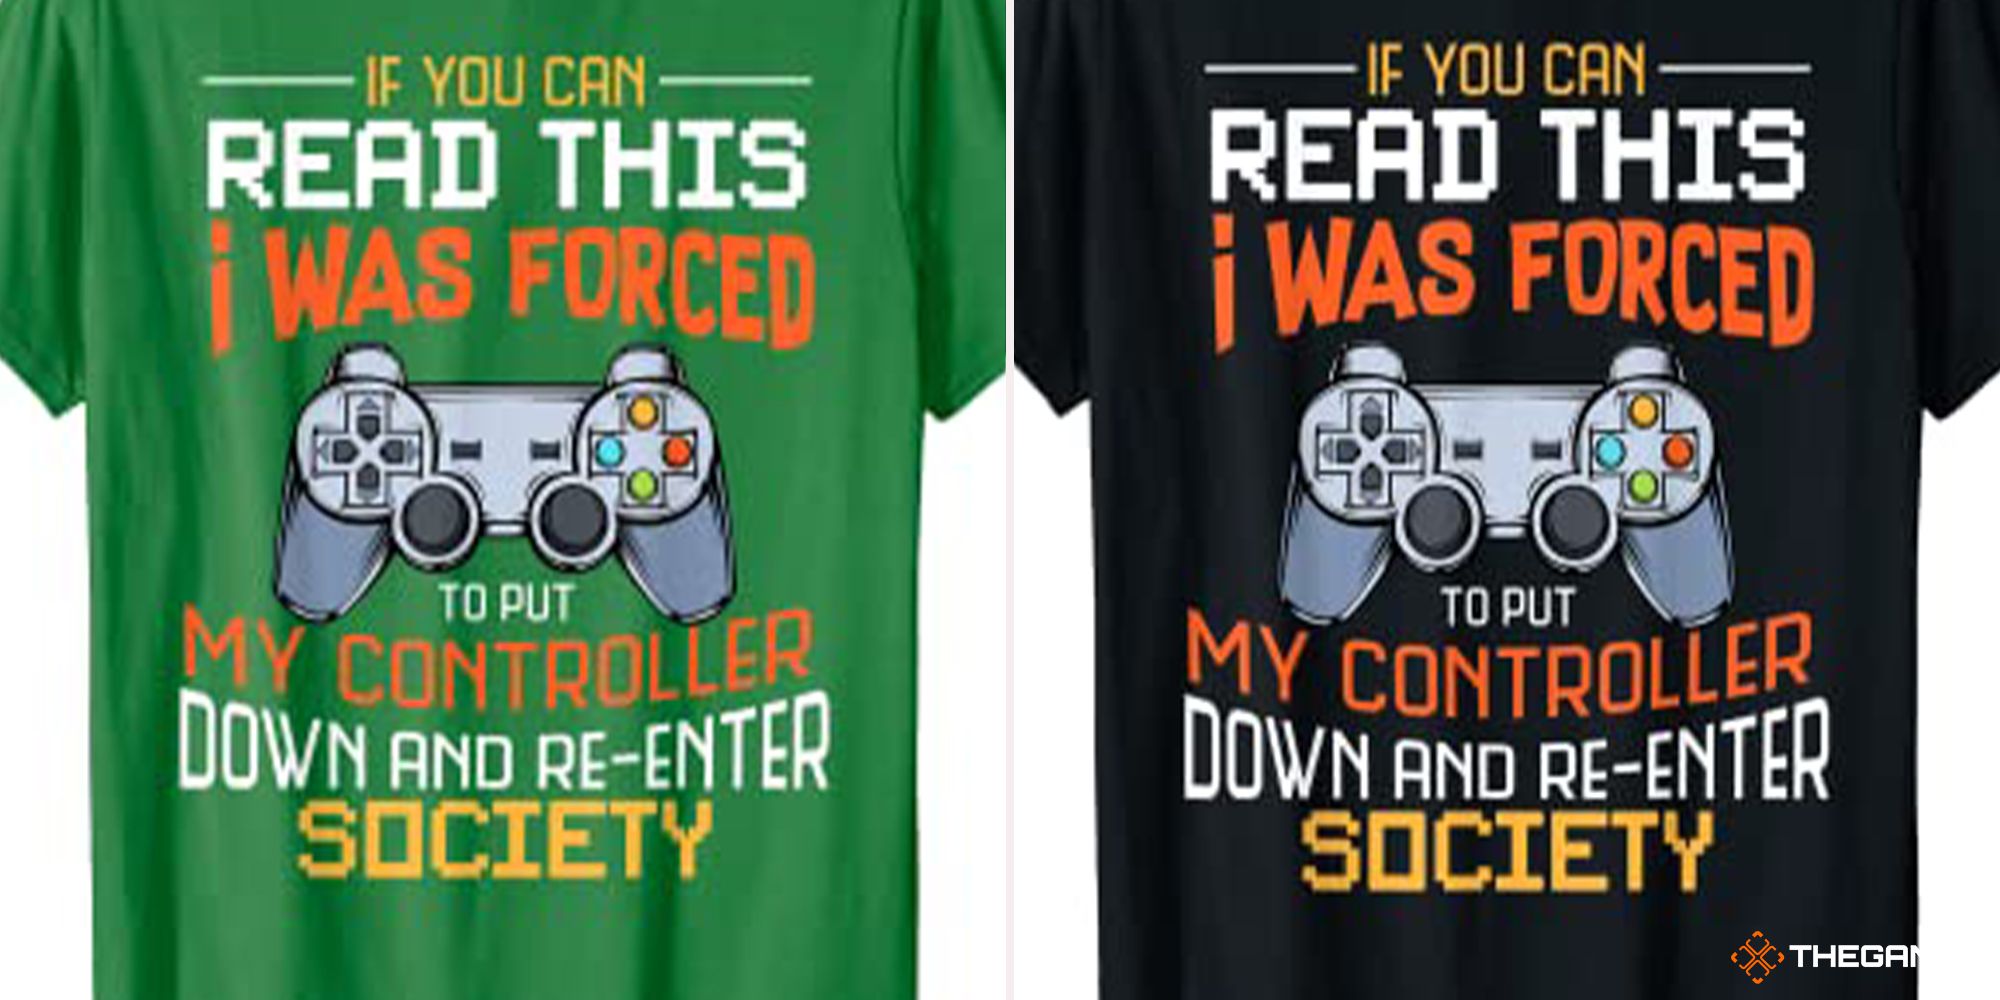 Re-Entering Society tee shirt